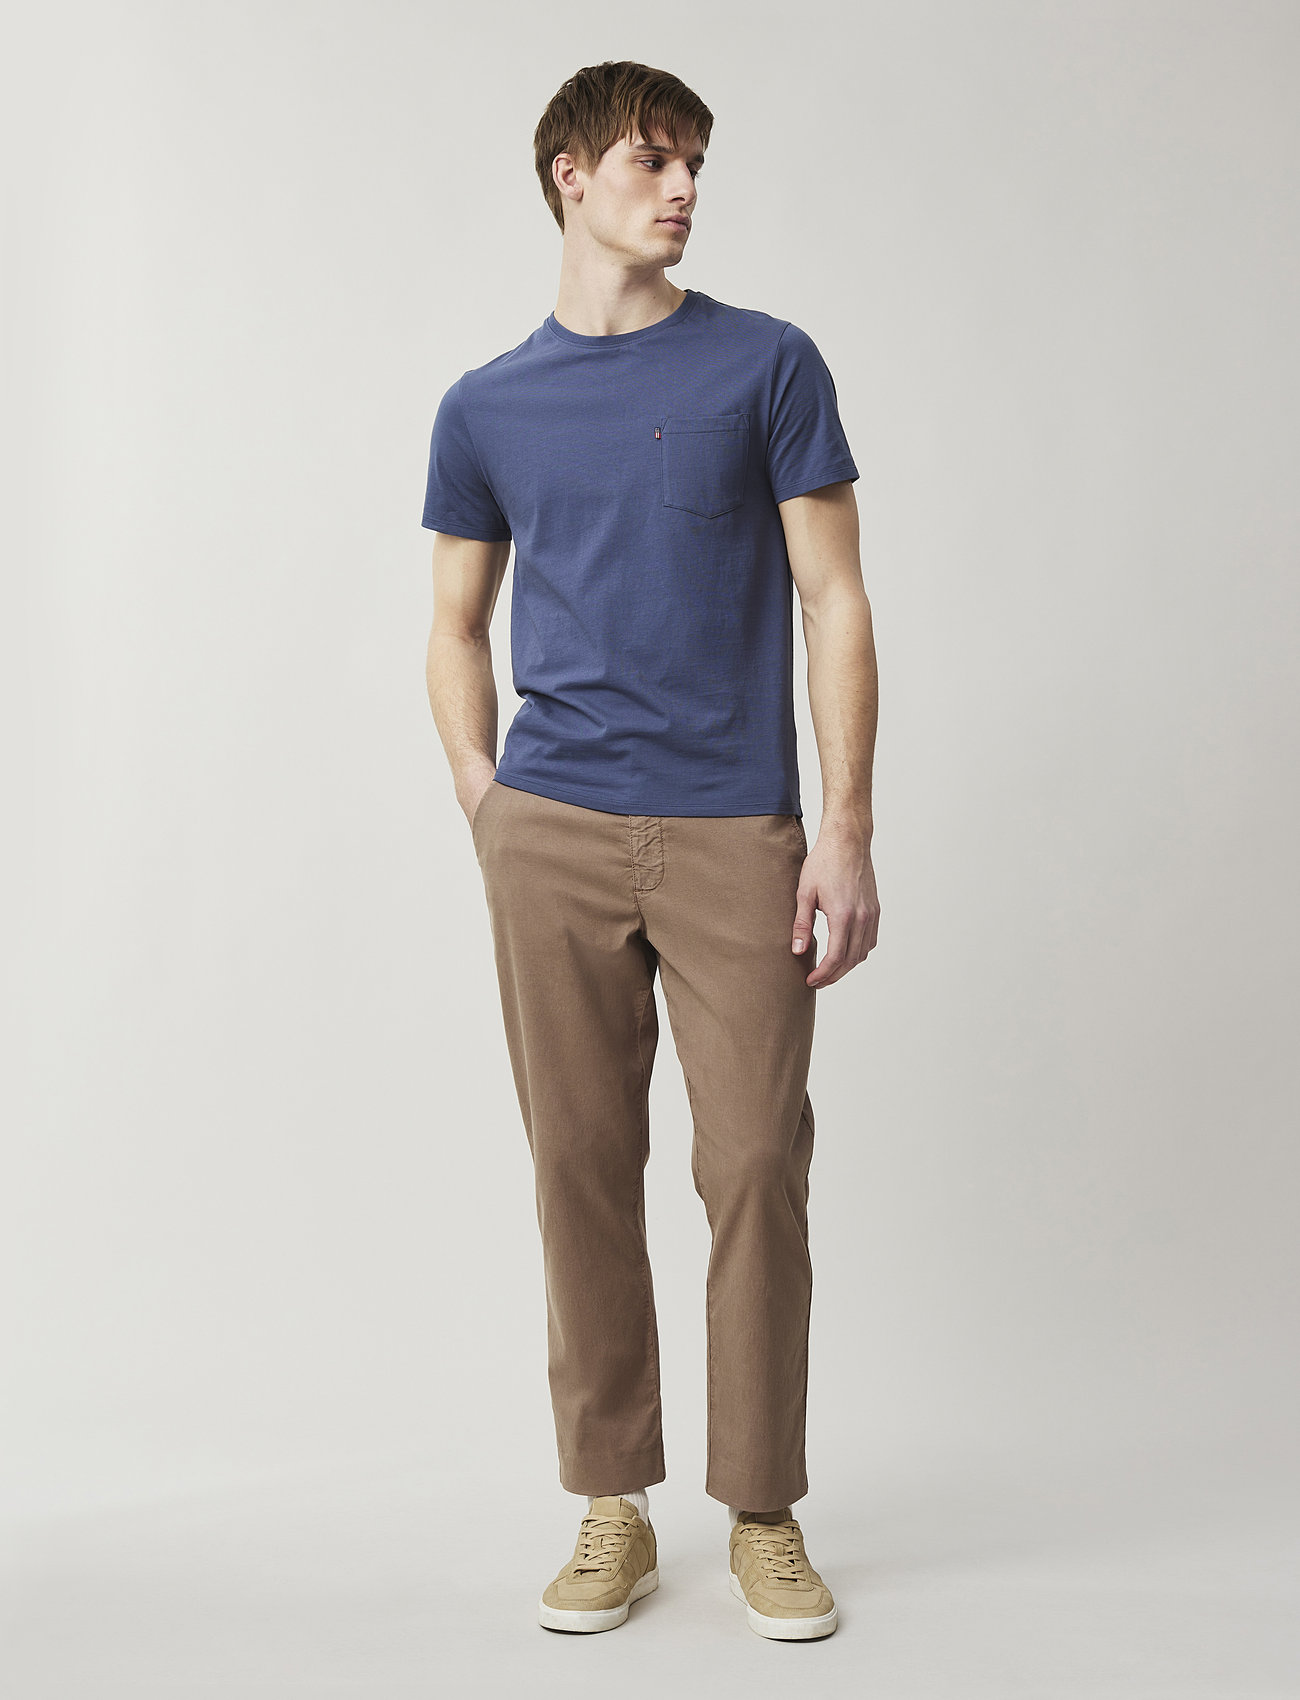 Lexington Clothing - Travis Tee - kortermede t-skjorter - medium blue - 1